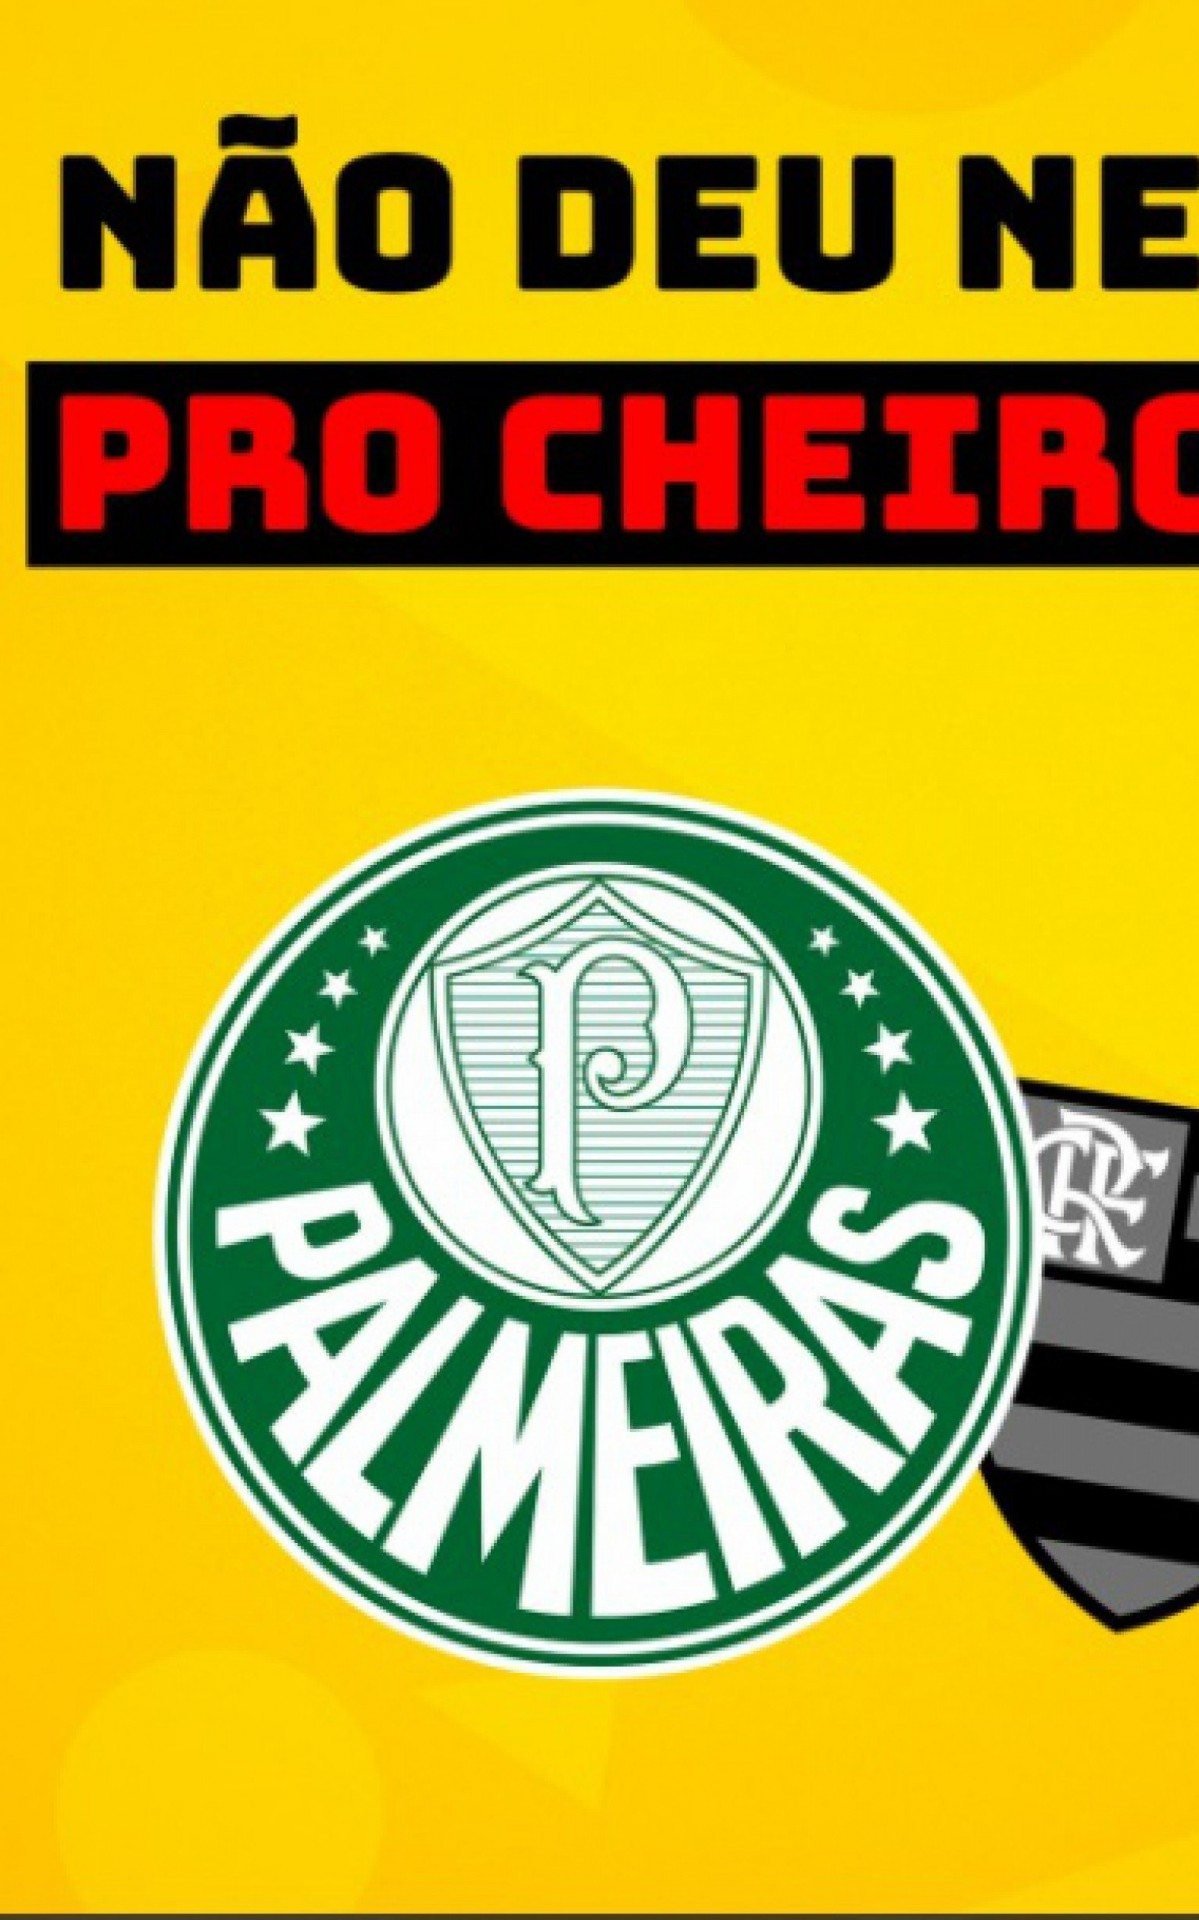 Memes Palmeiras 6 x 5 Atlético-MG Libertadores 2022 - Pênaltis 